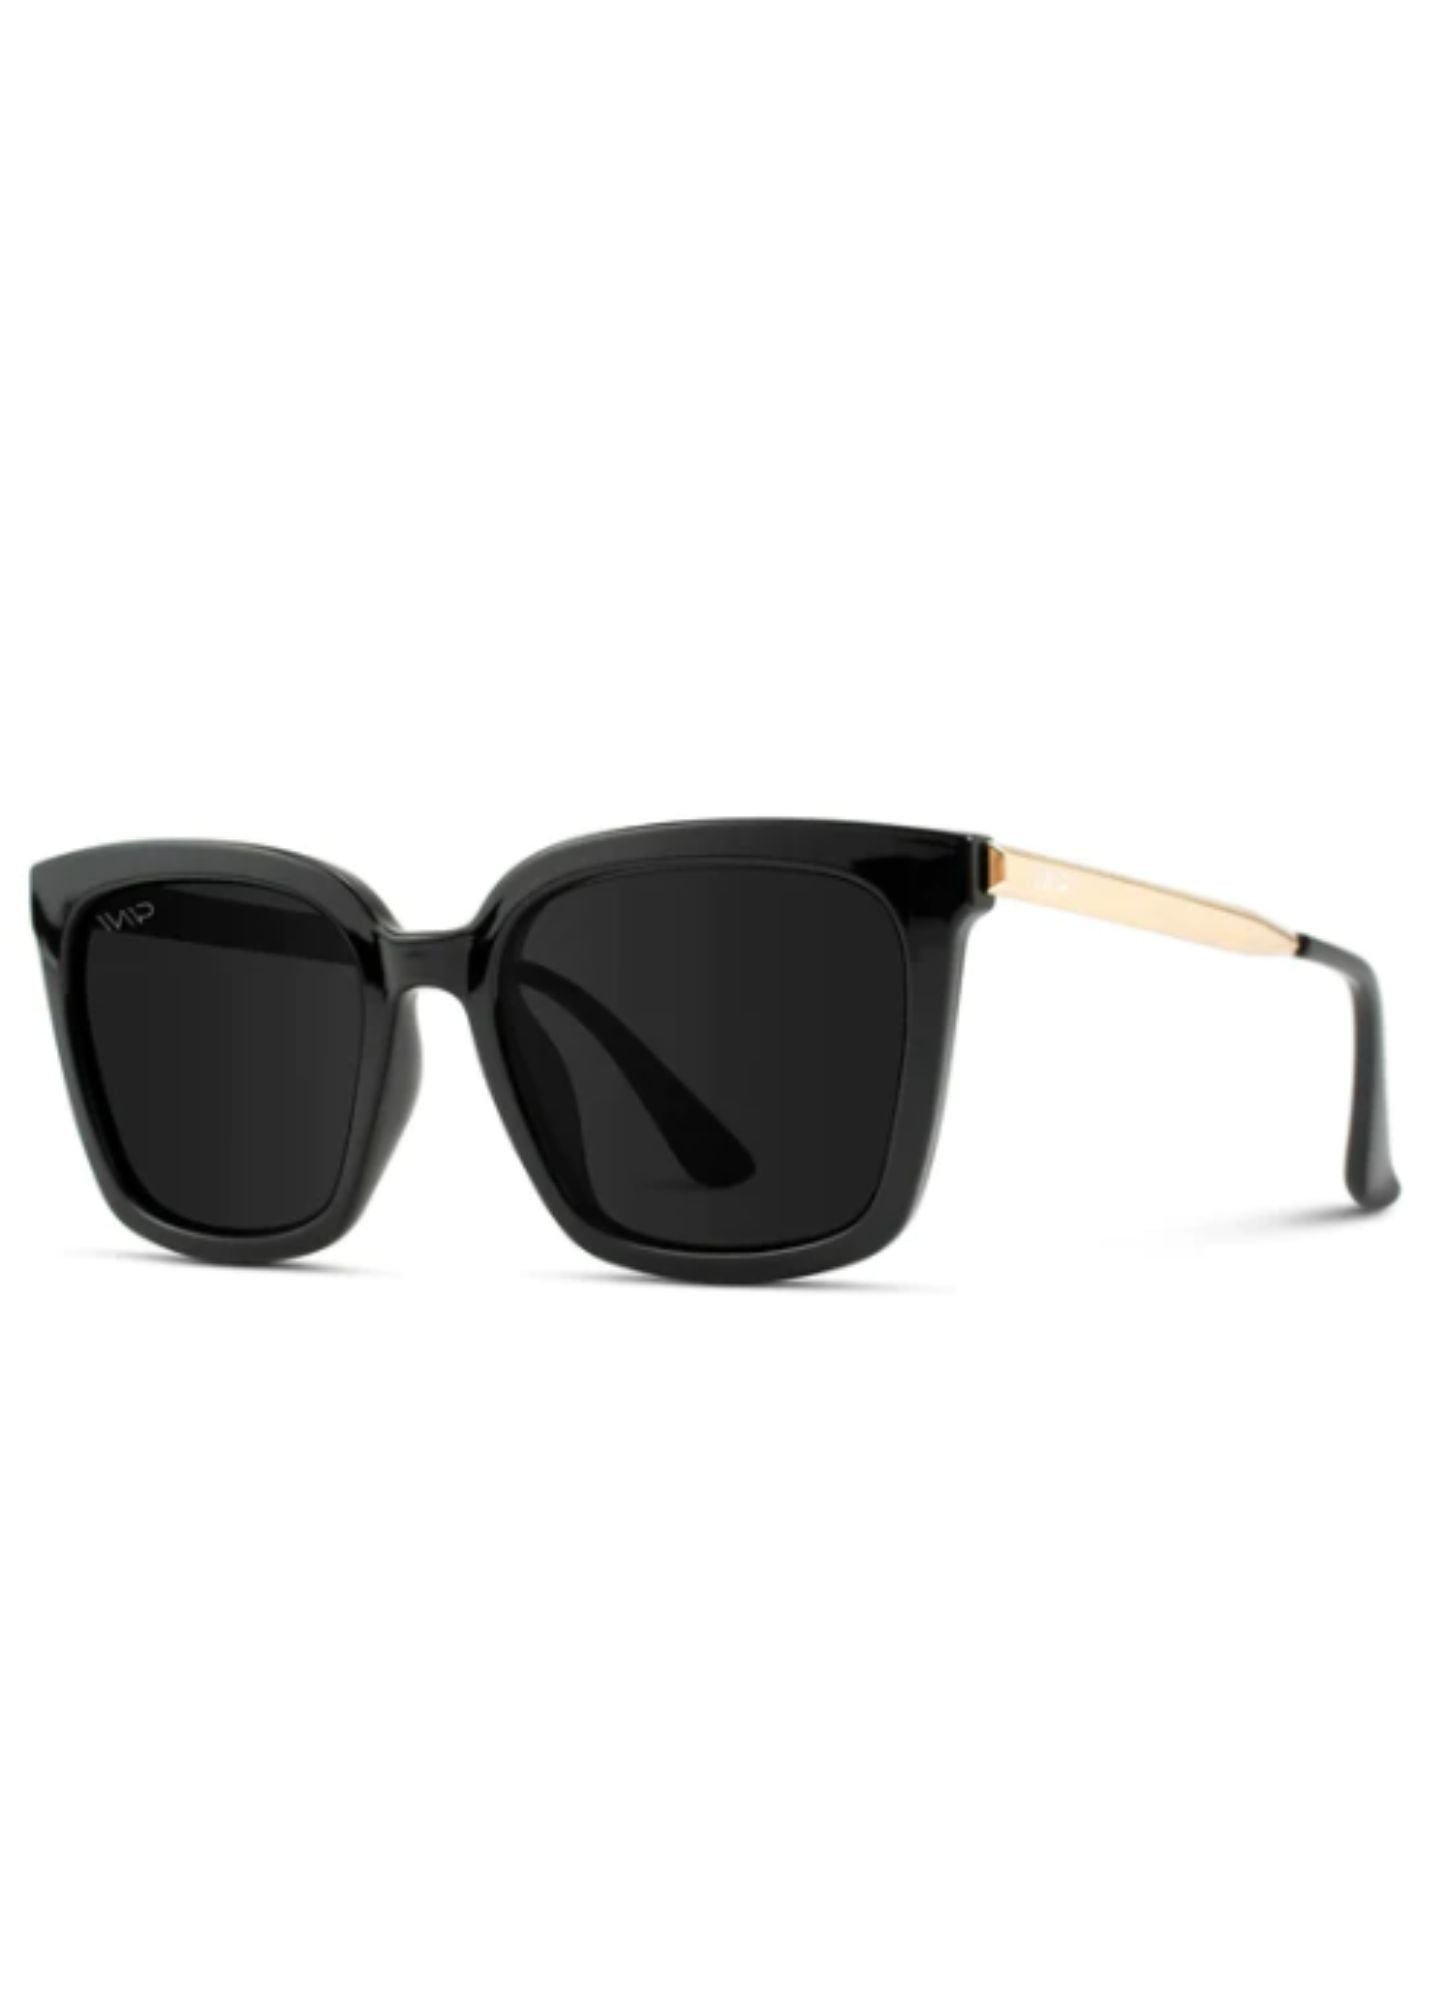 Square Frame Sunglasses Accessories Black